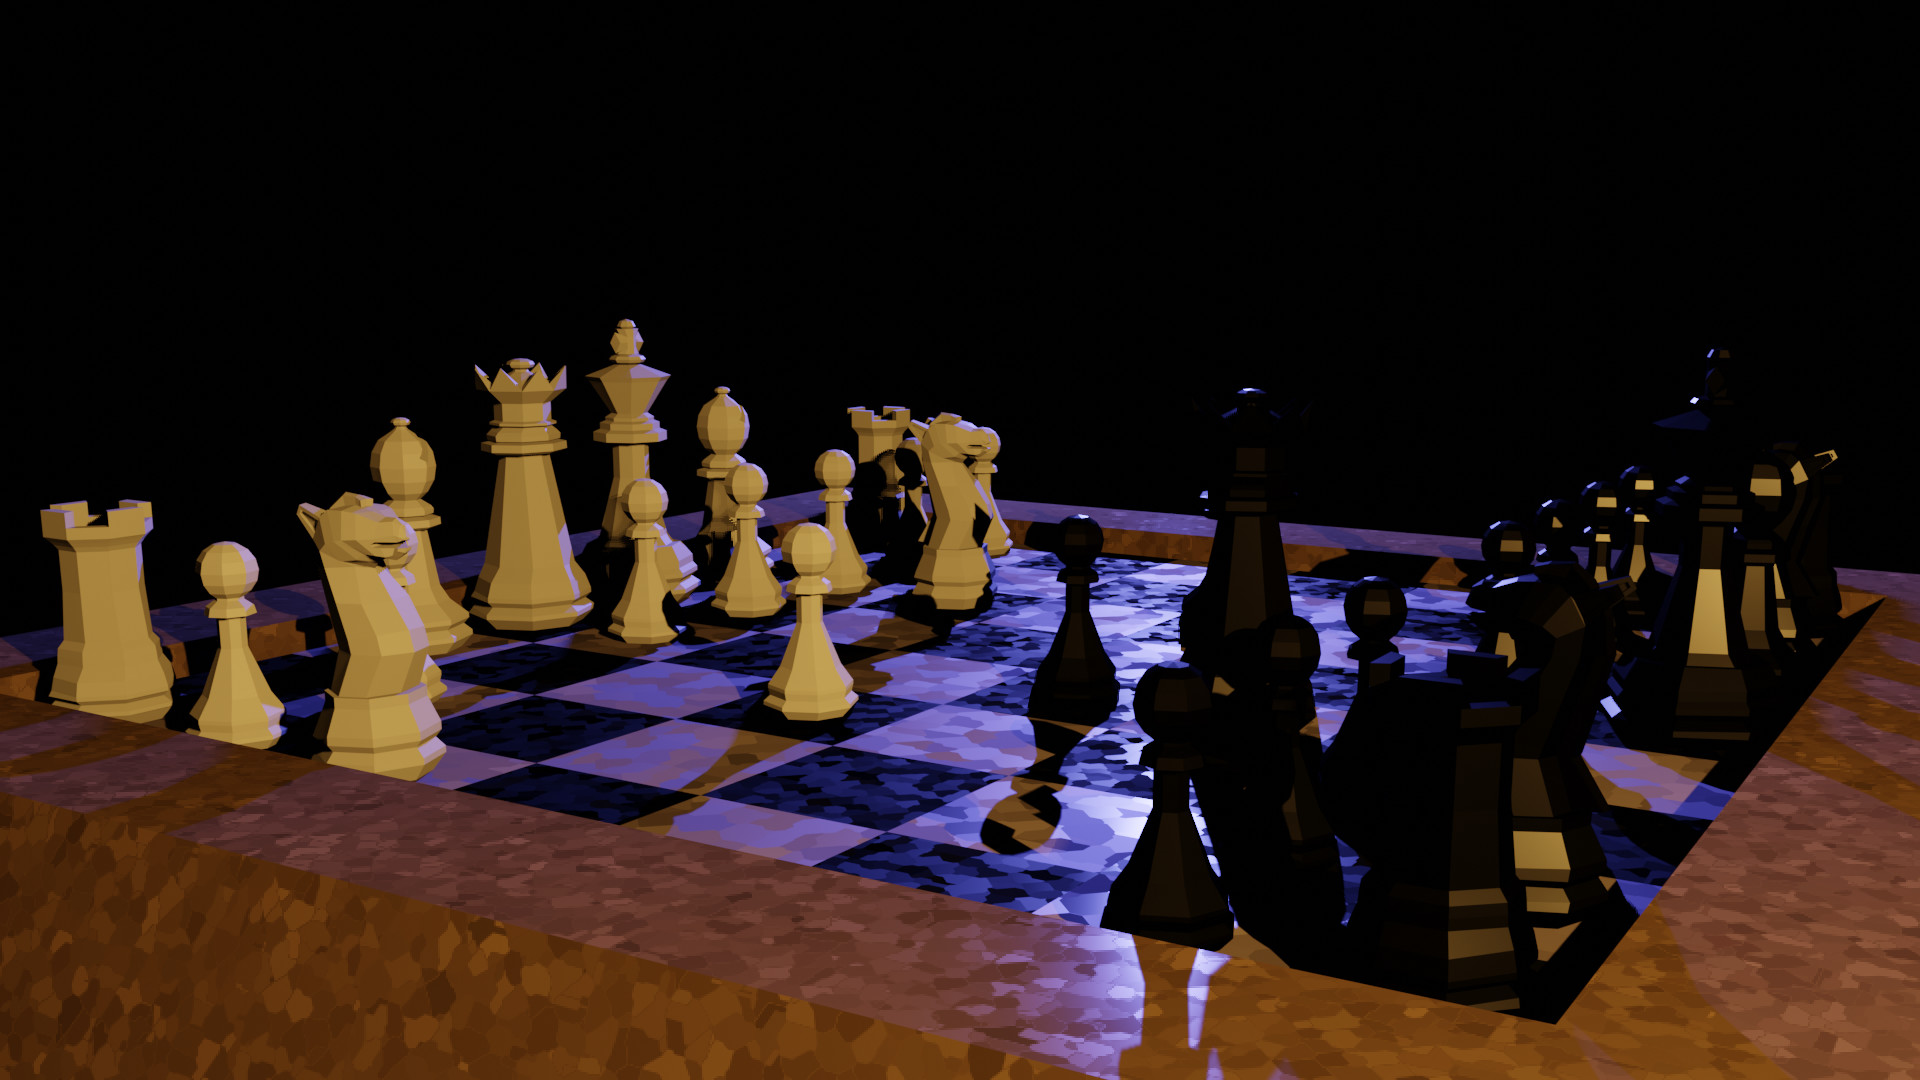 Dark Fantasy Chess Scene With Animated Short Film - Show - GameDev.tv